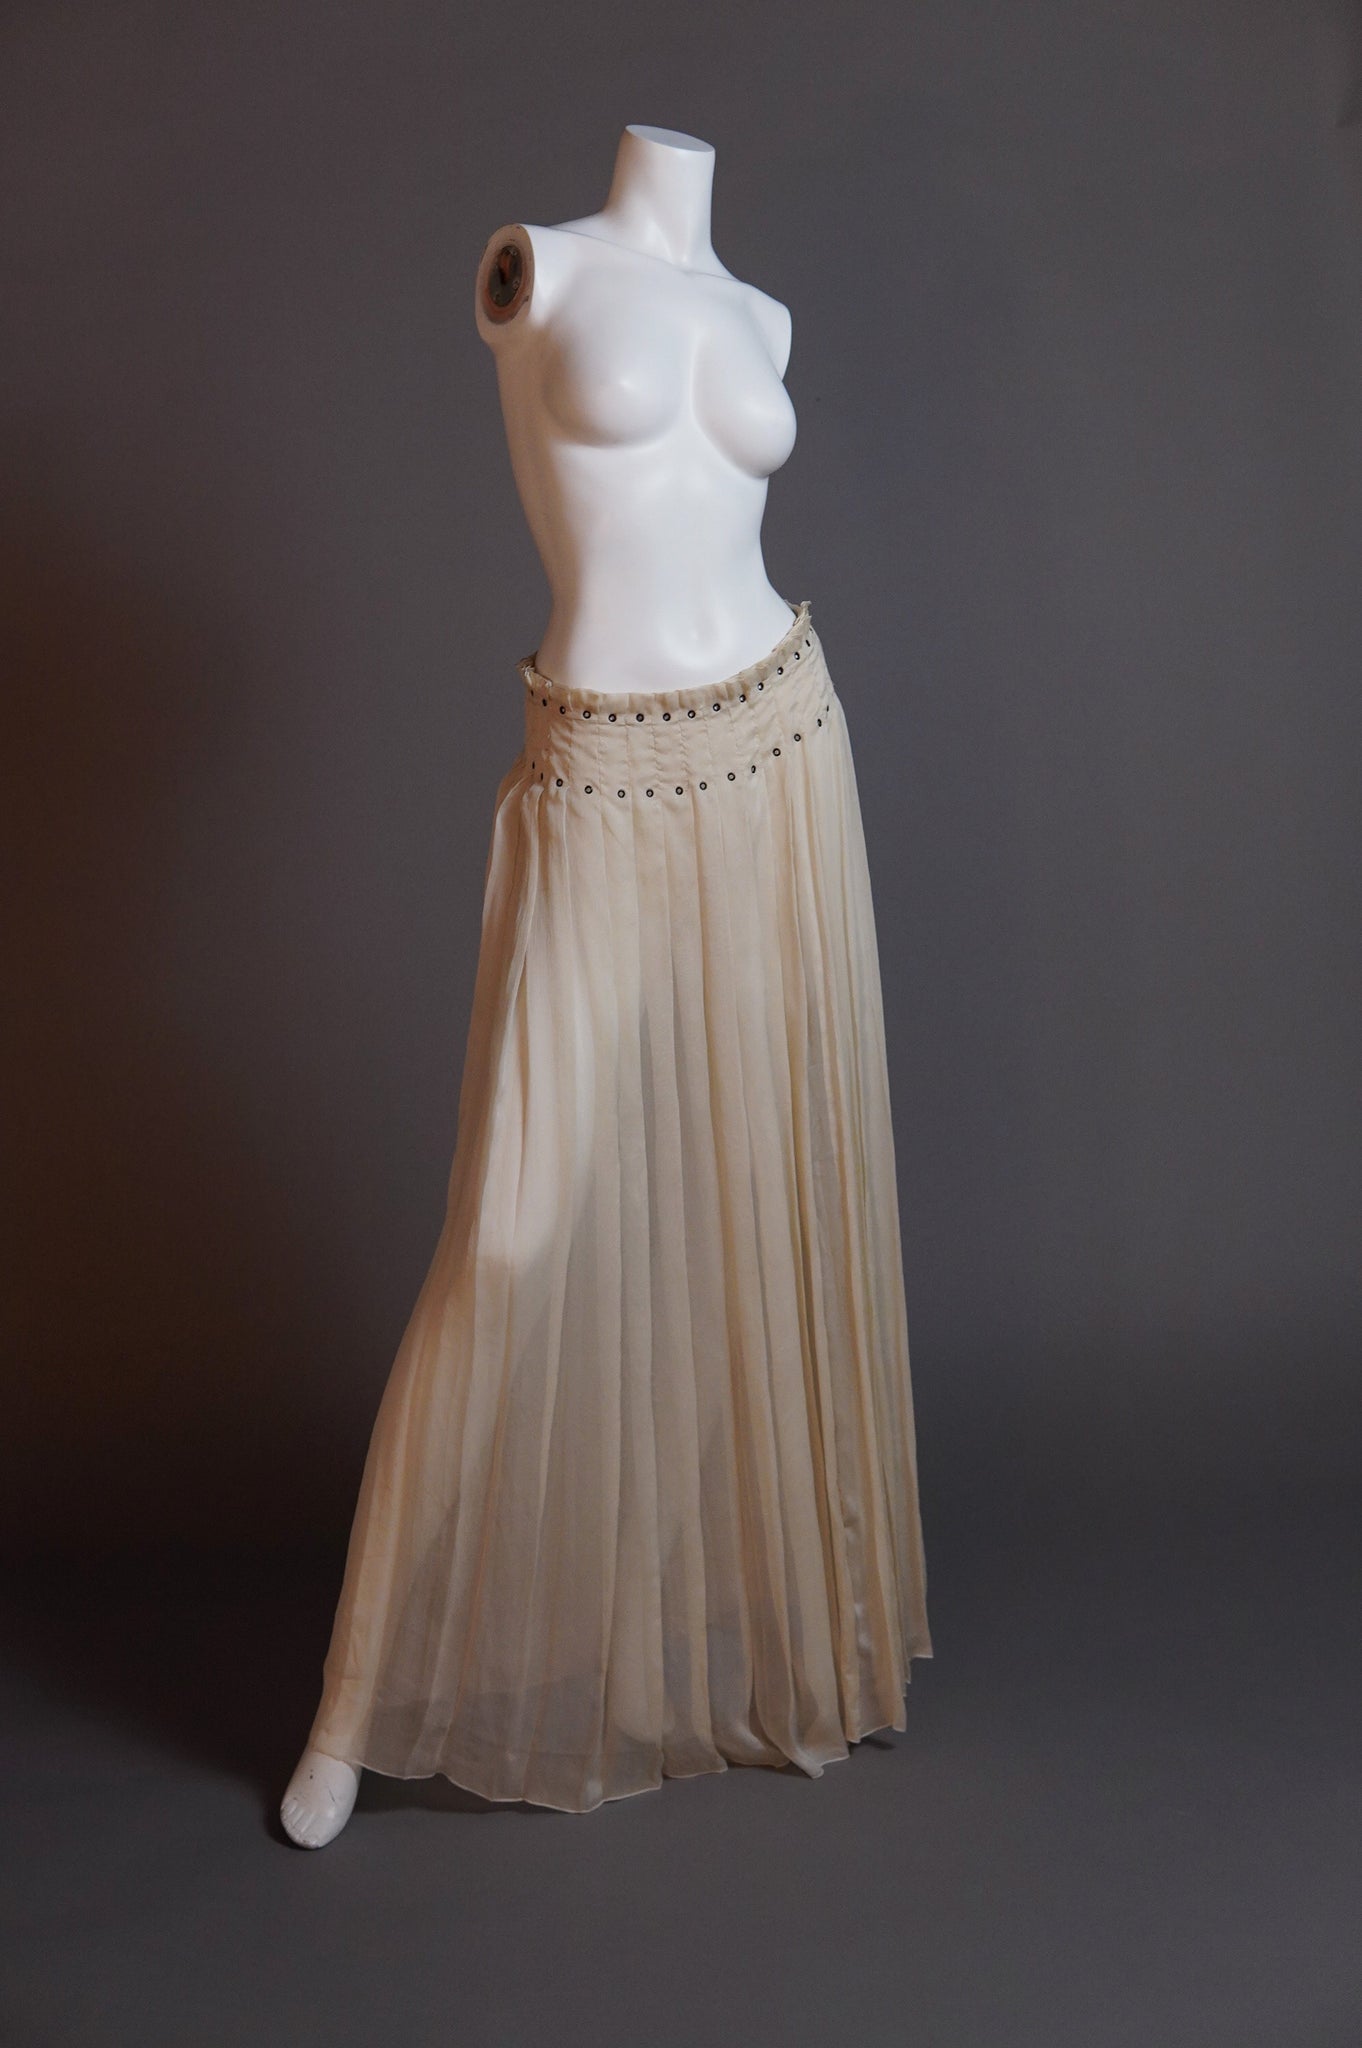 S/S 2000 Prada pleated silk chiffon skirt with grommets - XS/S